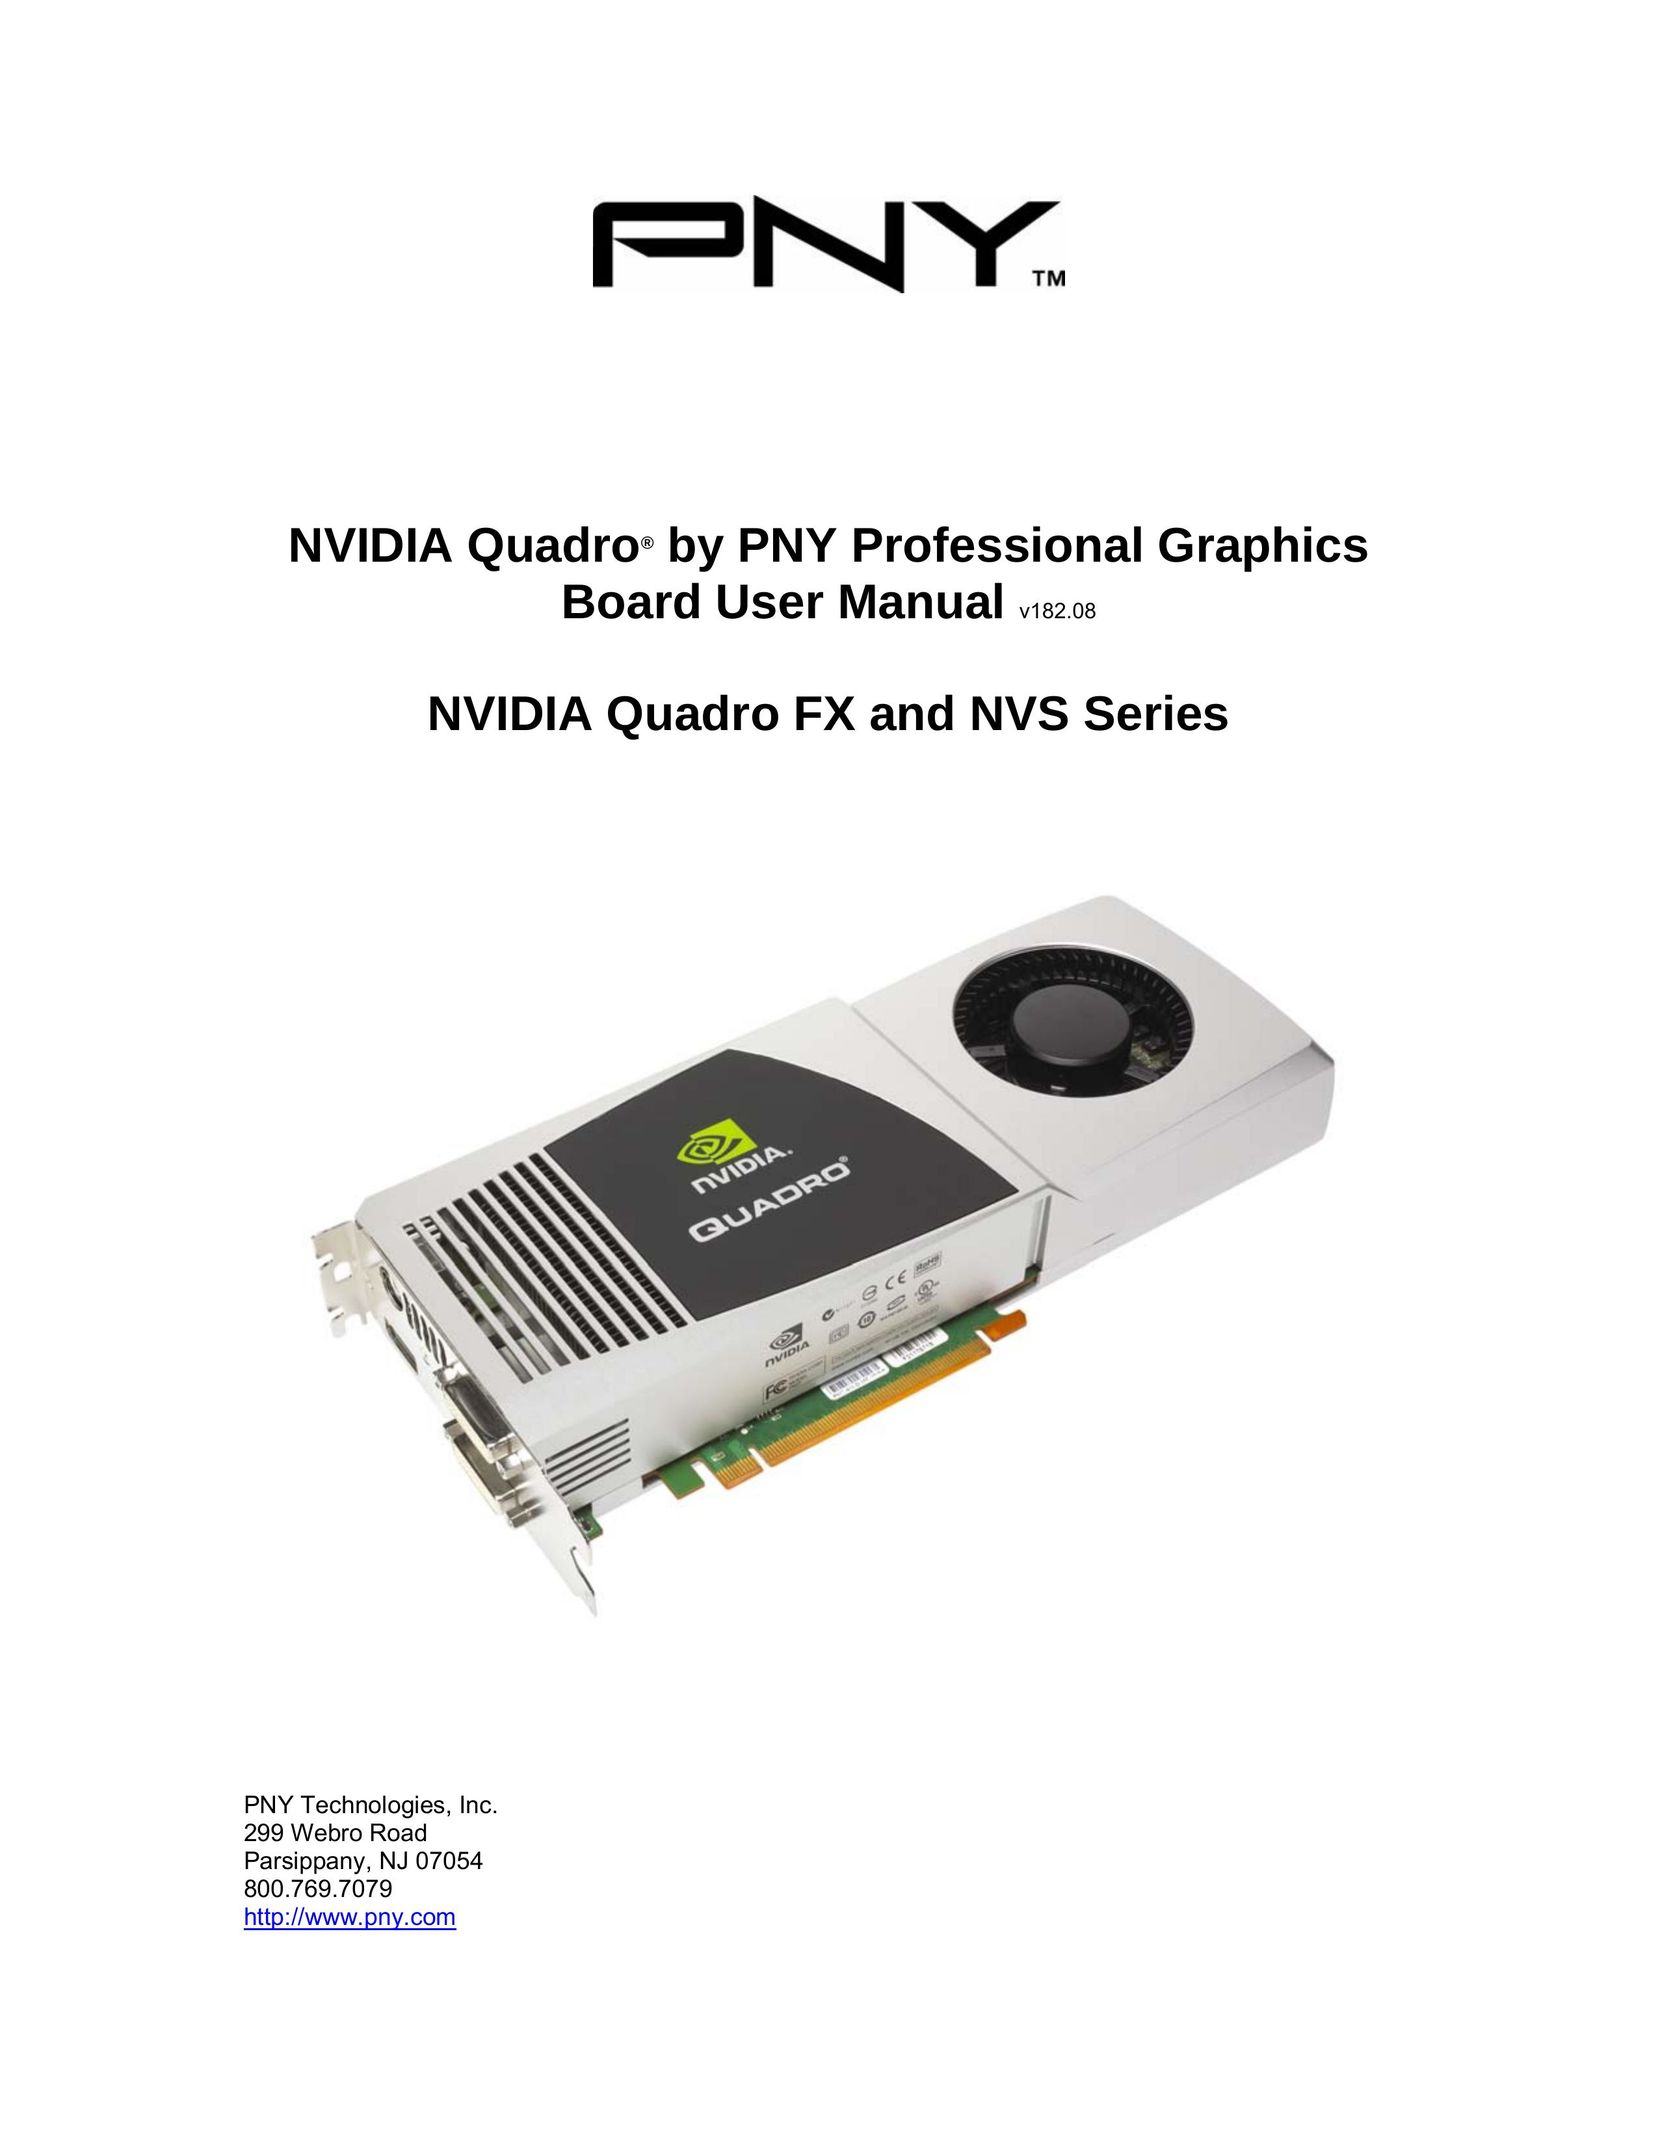 PNY NVS 450 Computer Hardware User Manual